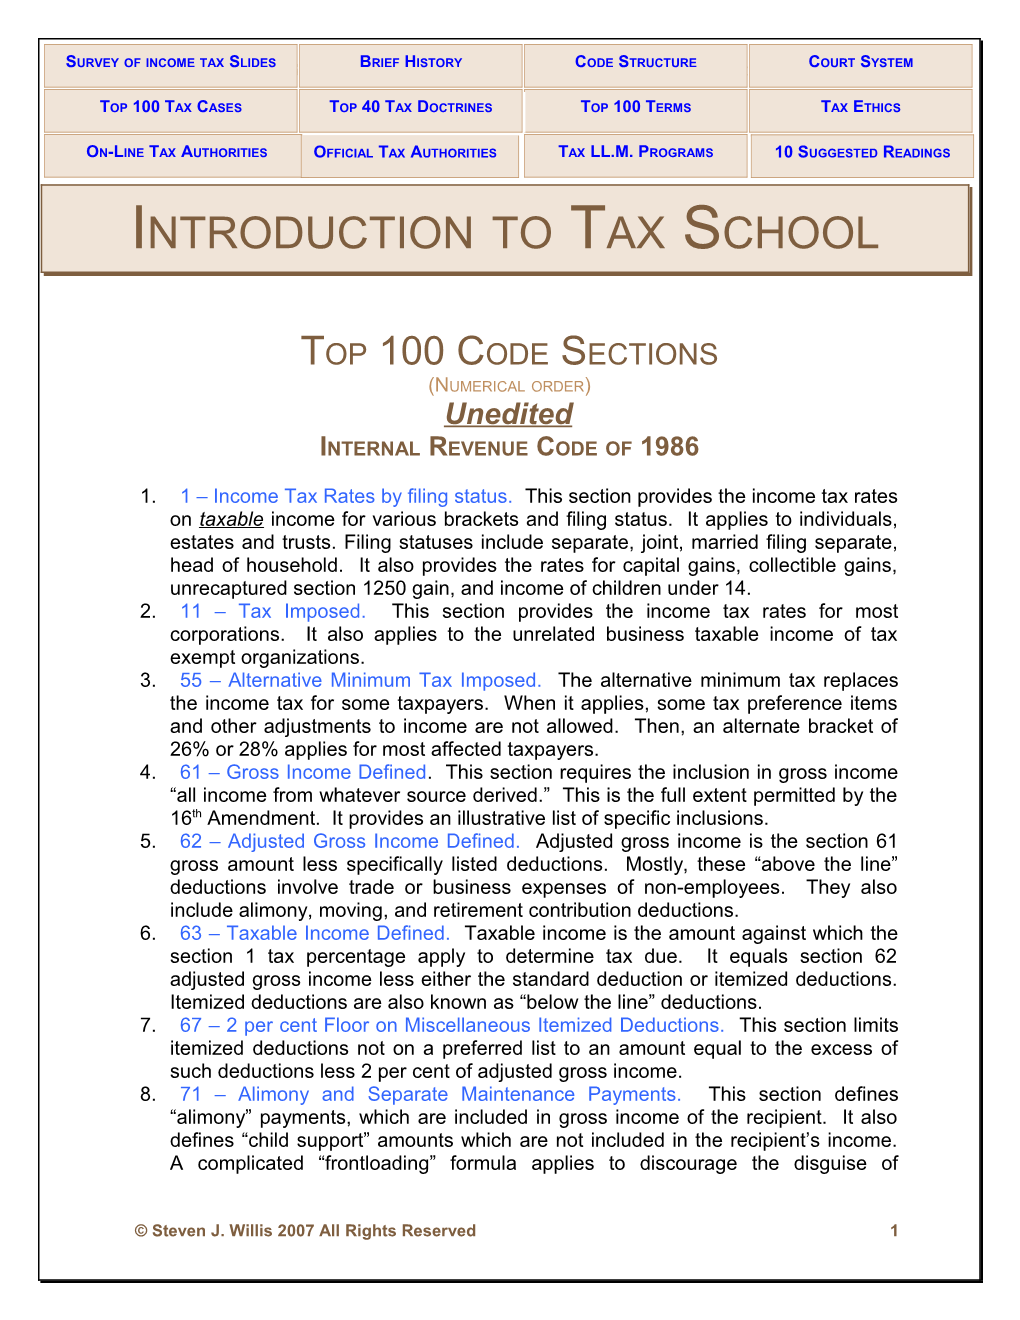 Internal Revenue Code of 1986